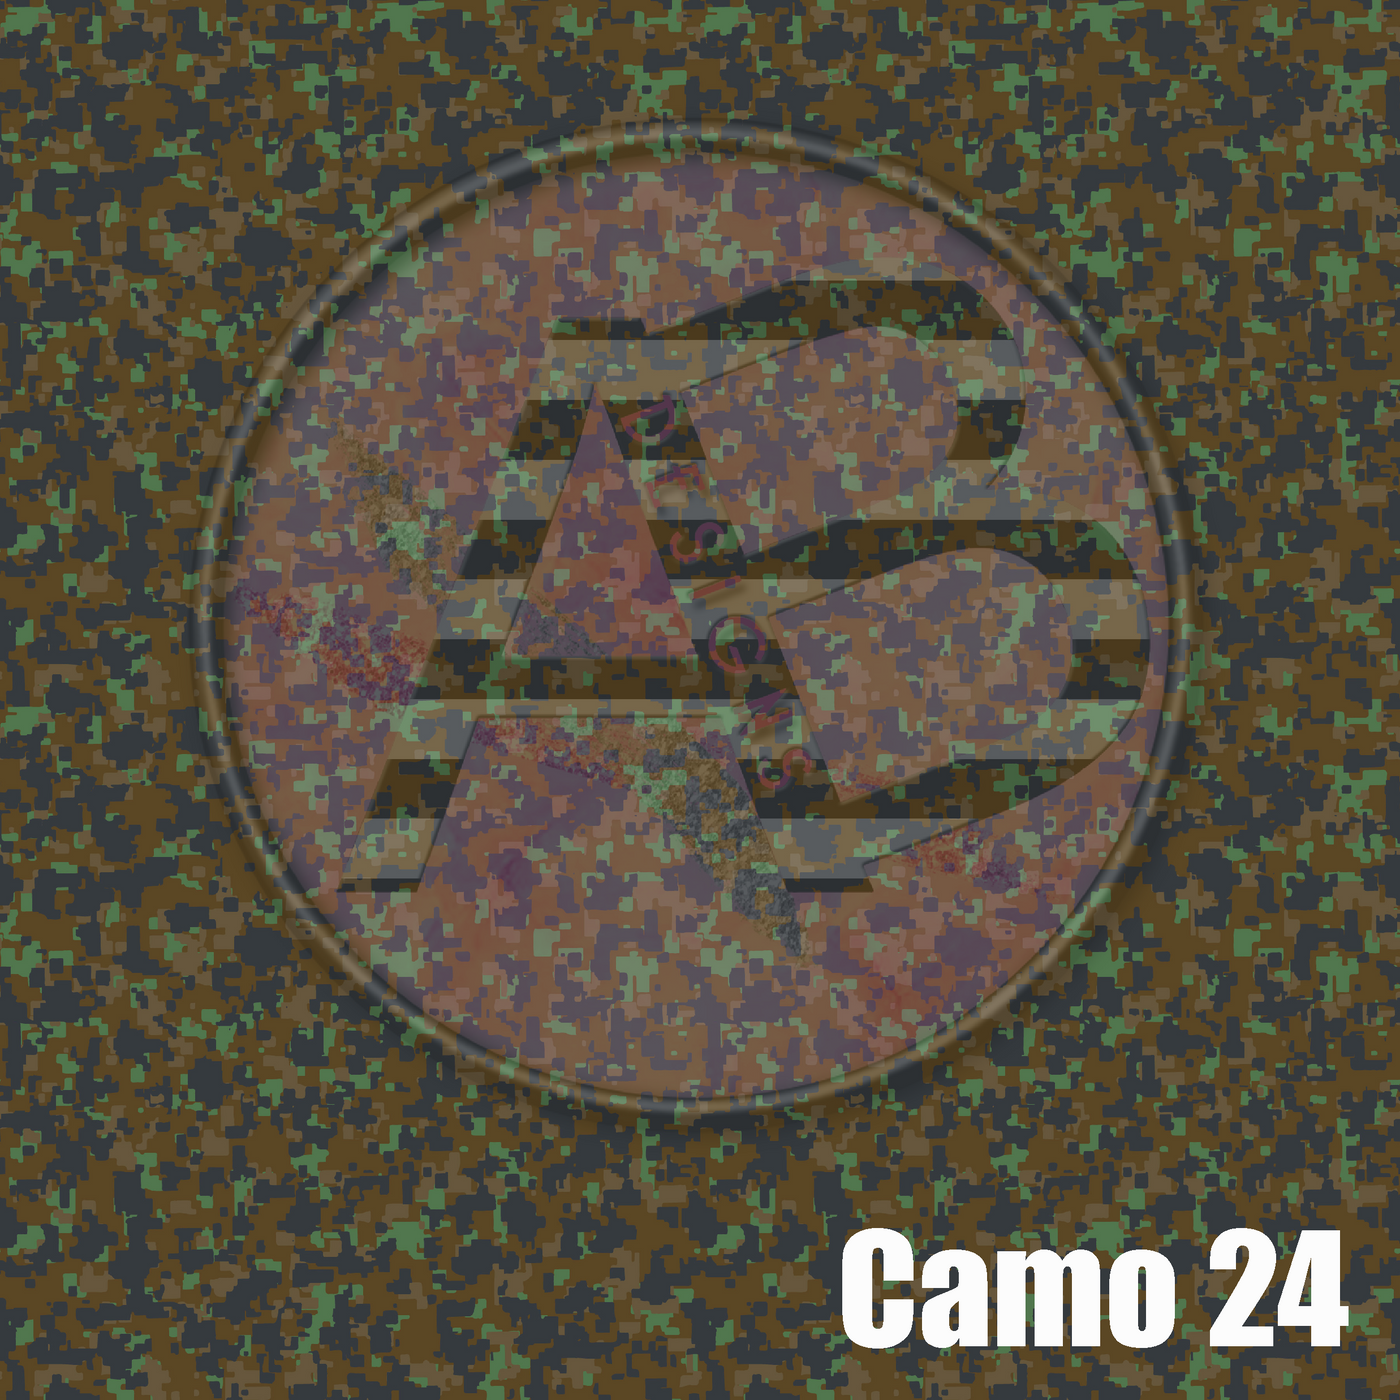 Adhesive Patterned Vinyl - Camo 24